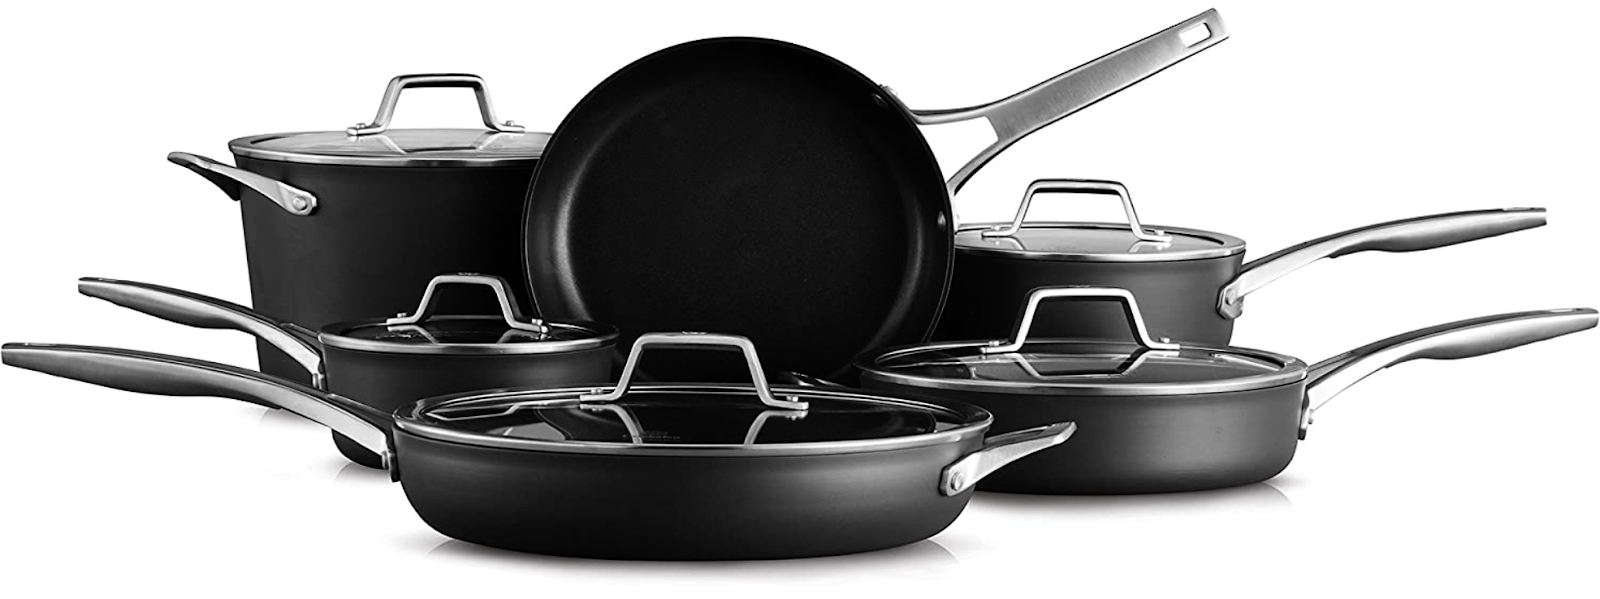 KitchenAid Hard Anodized Nonstick Cookware Pots and Pans Set, 4 Piece, Onyx  Black